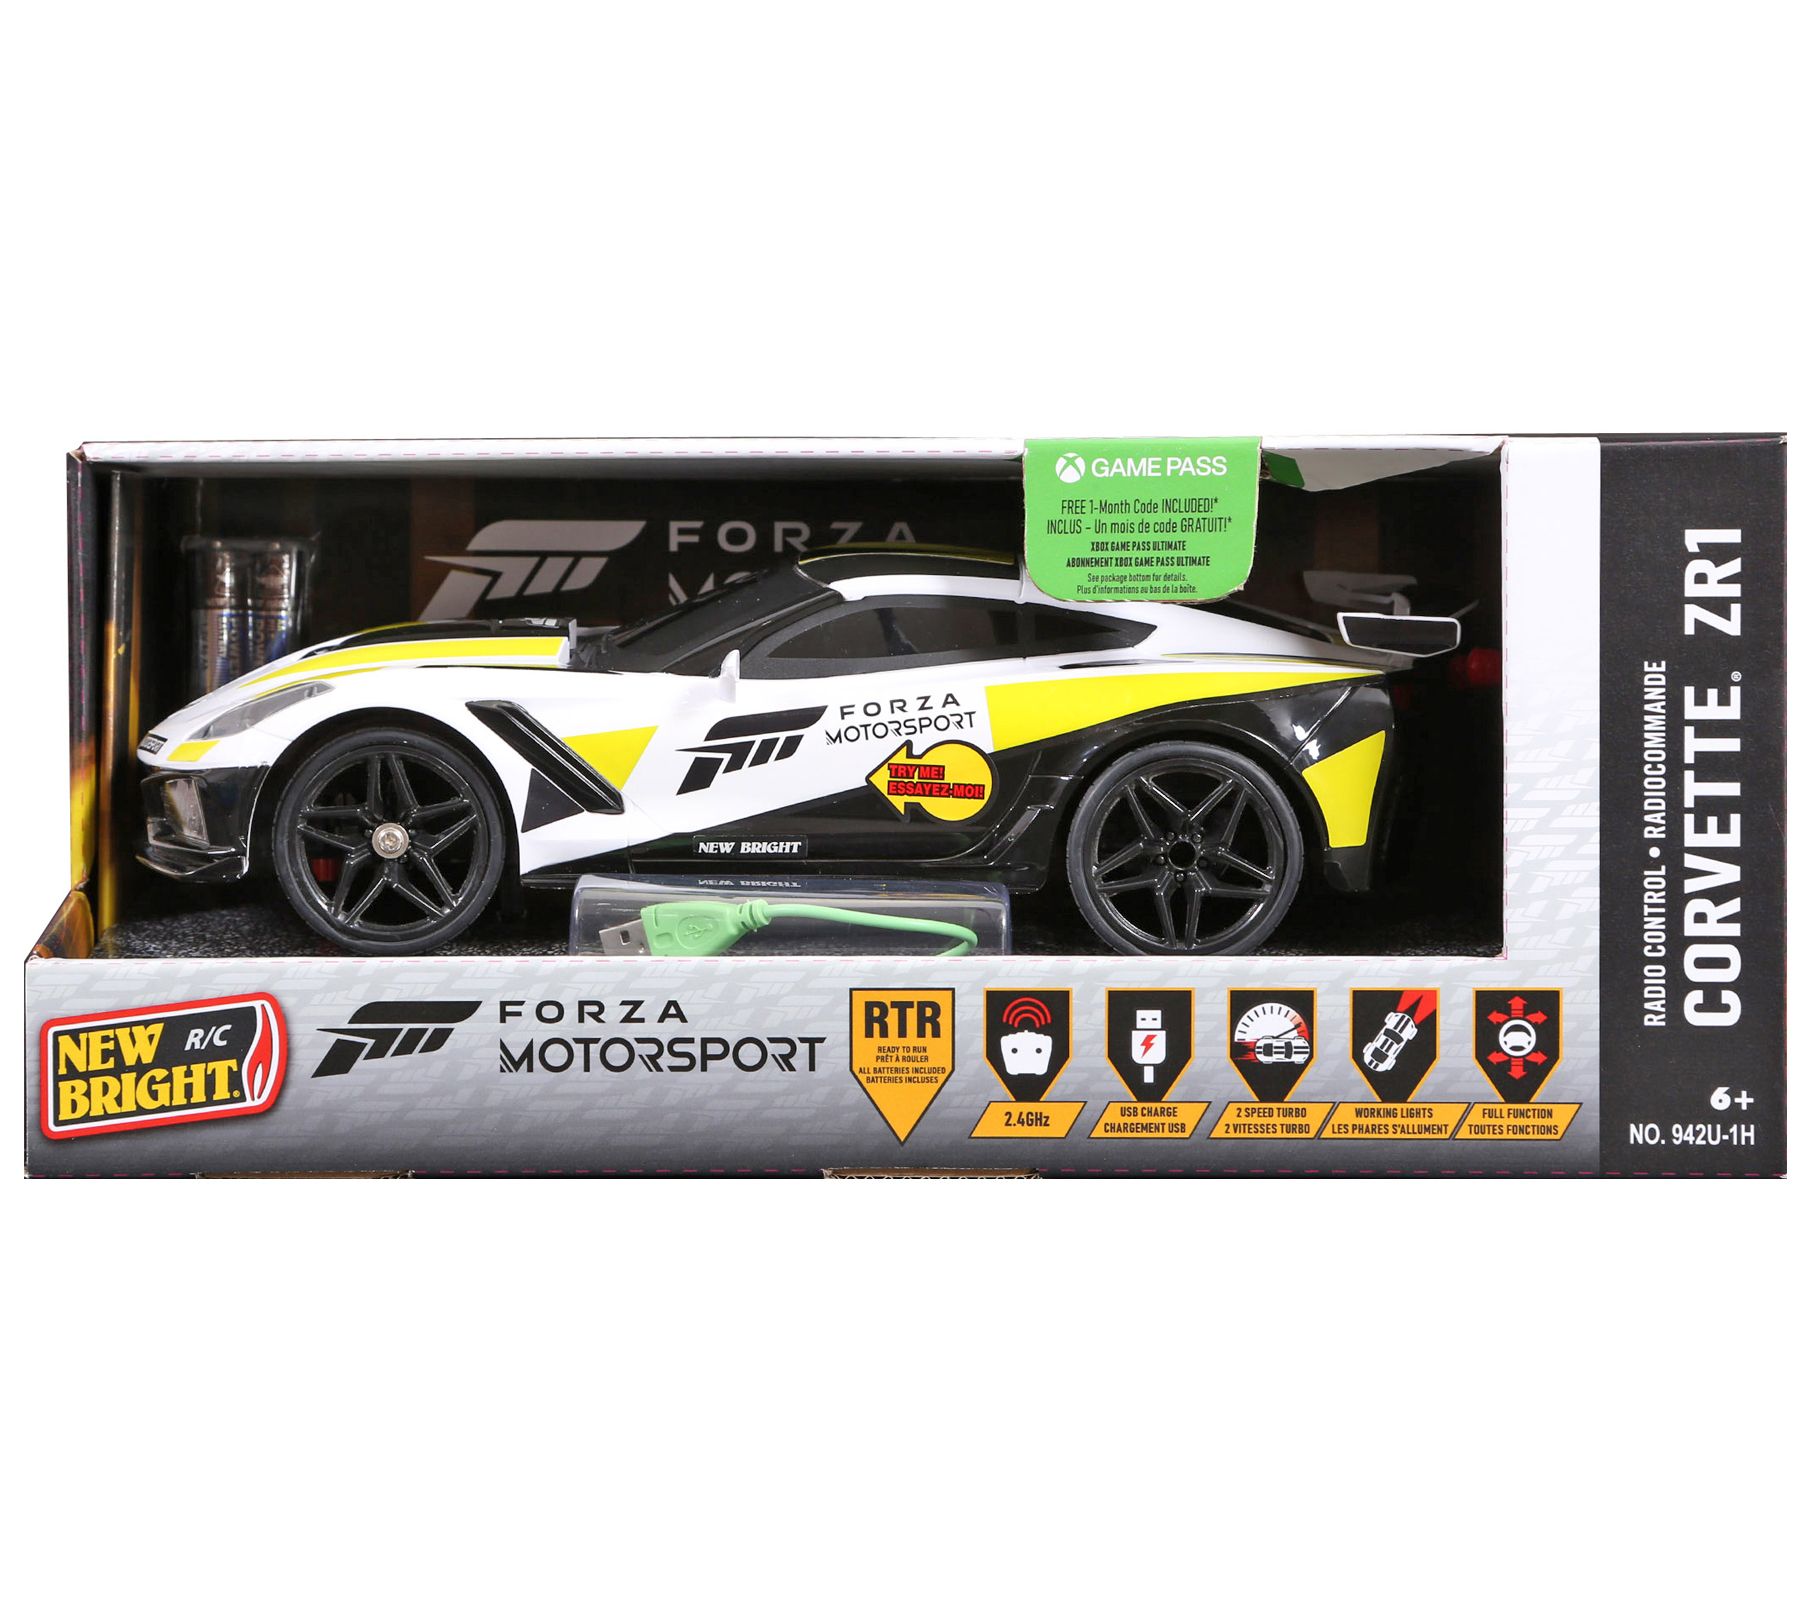 Corvette E-Ray Star Of Upcoming Forza Motorsport Game